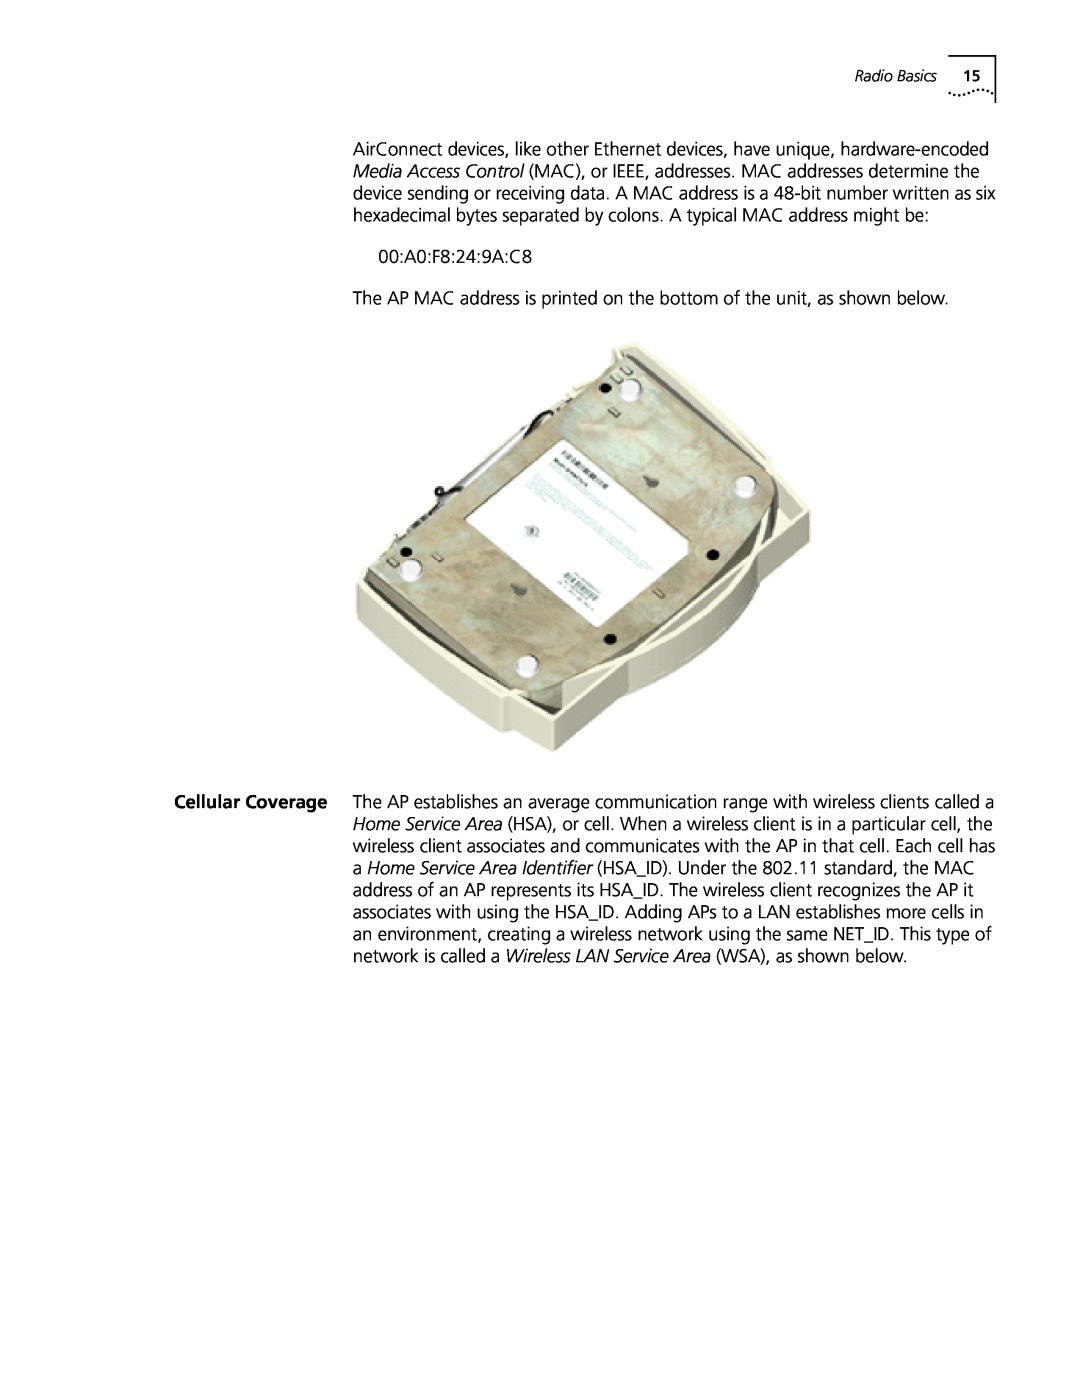 Cabletron Systems 3Com manual 00A0F8249AC8, Radio Basics 